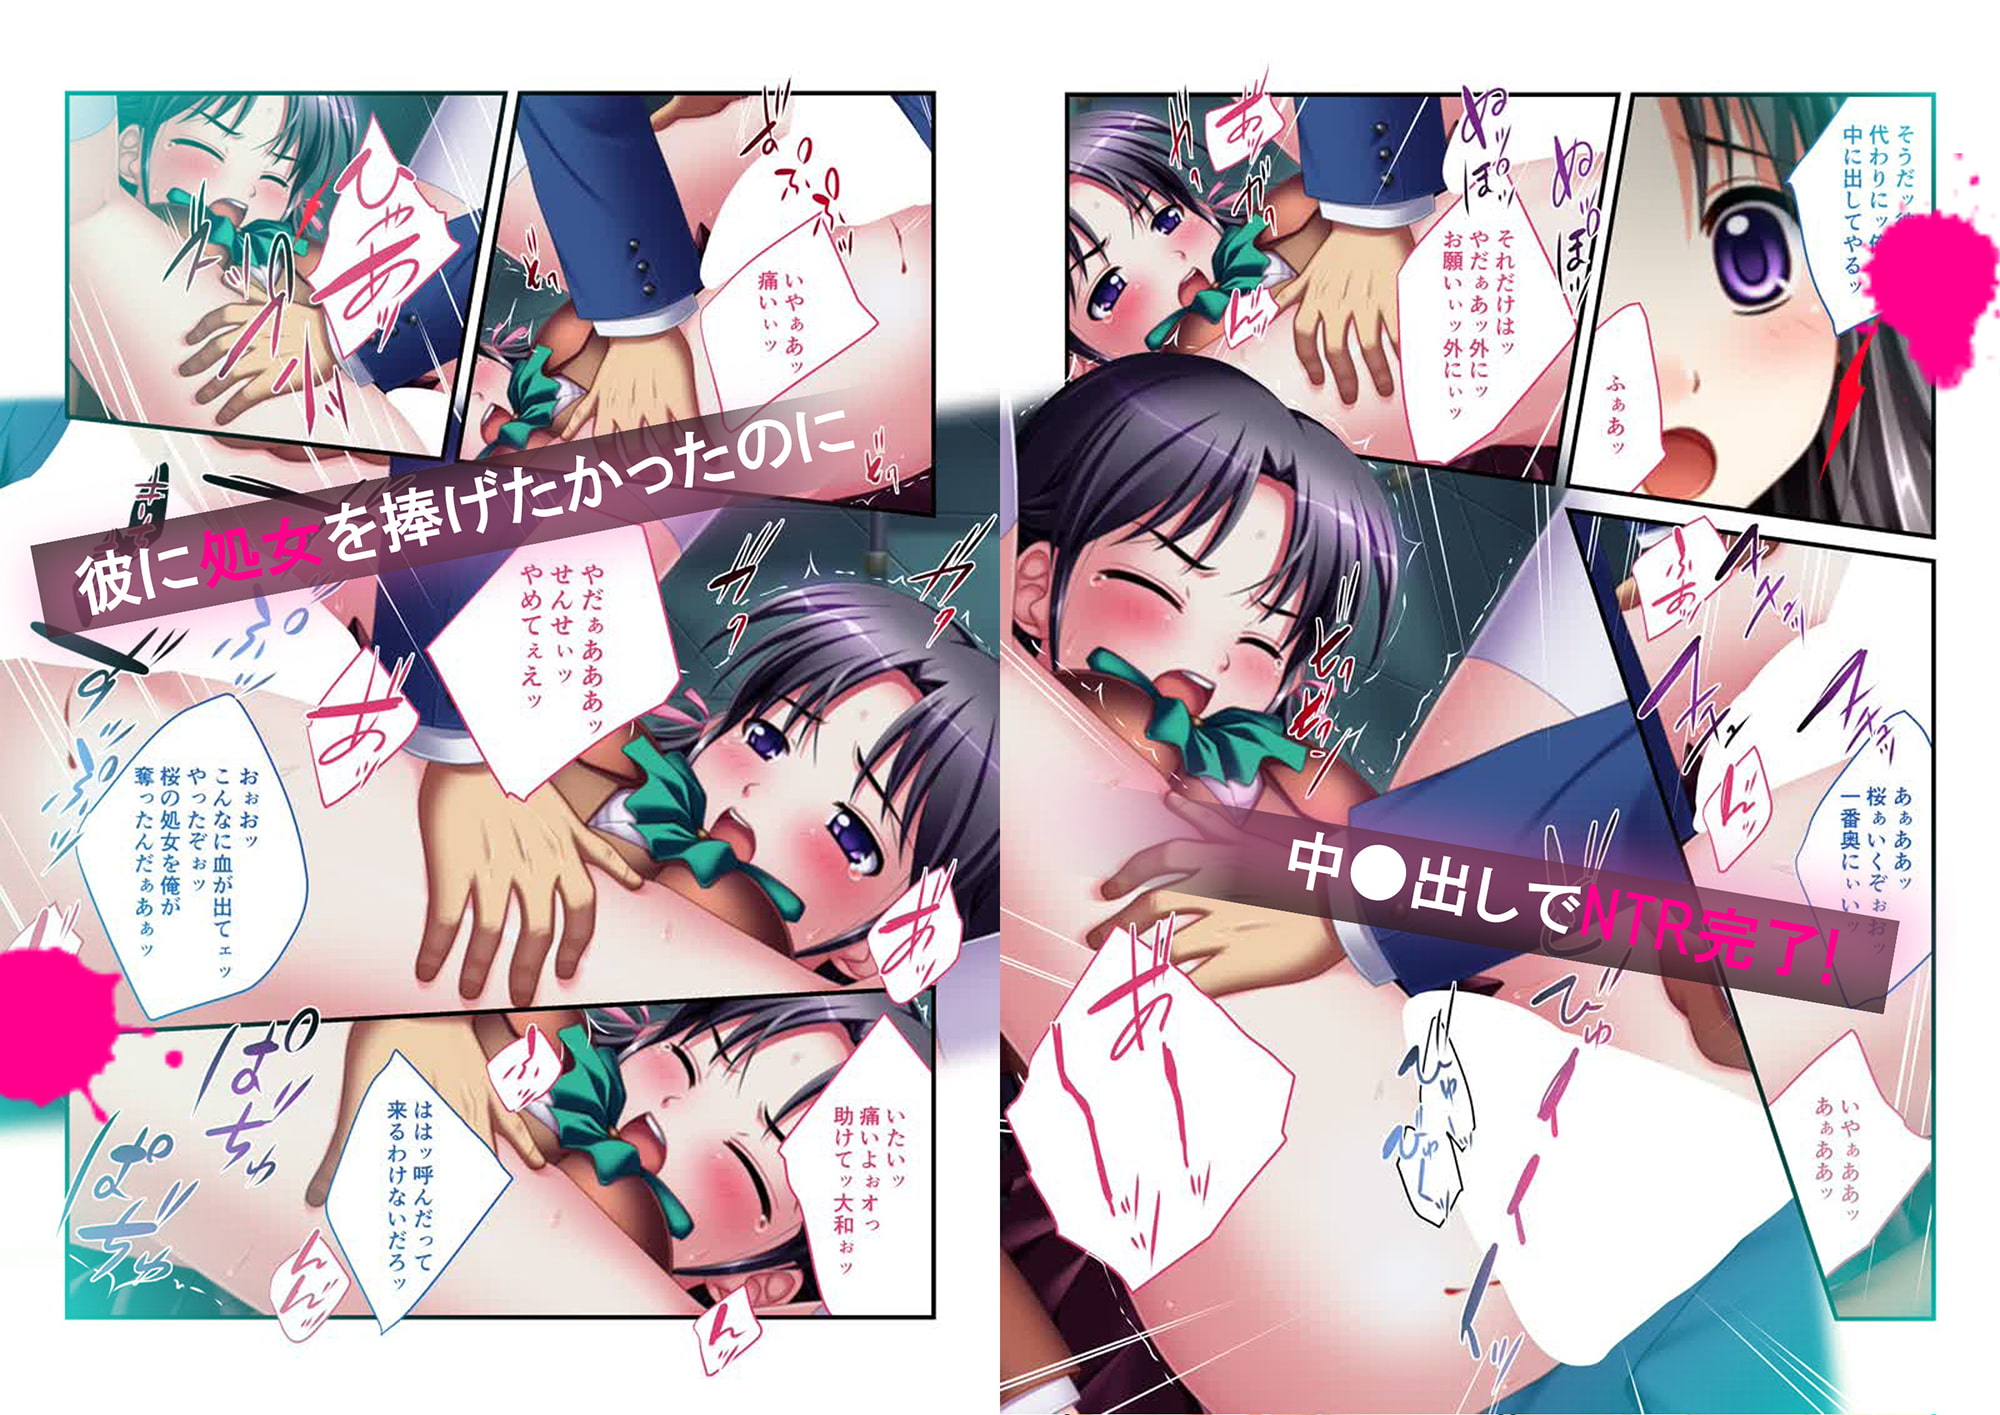 Schoolgirls Framed (6) ~Cucking a Couple~ [Full Color Comic Ver]